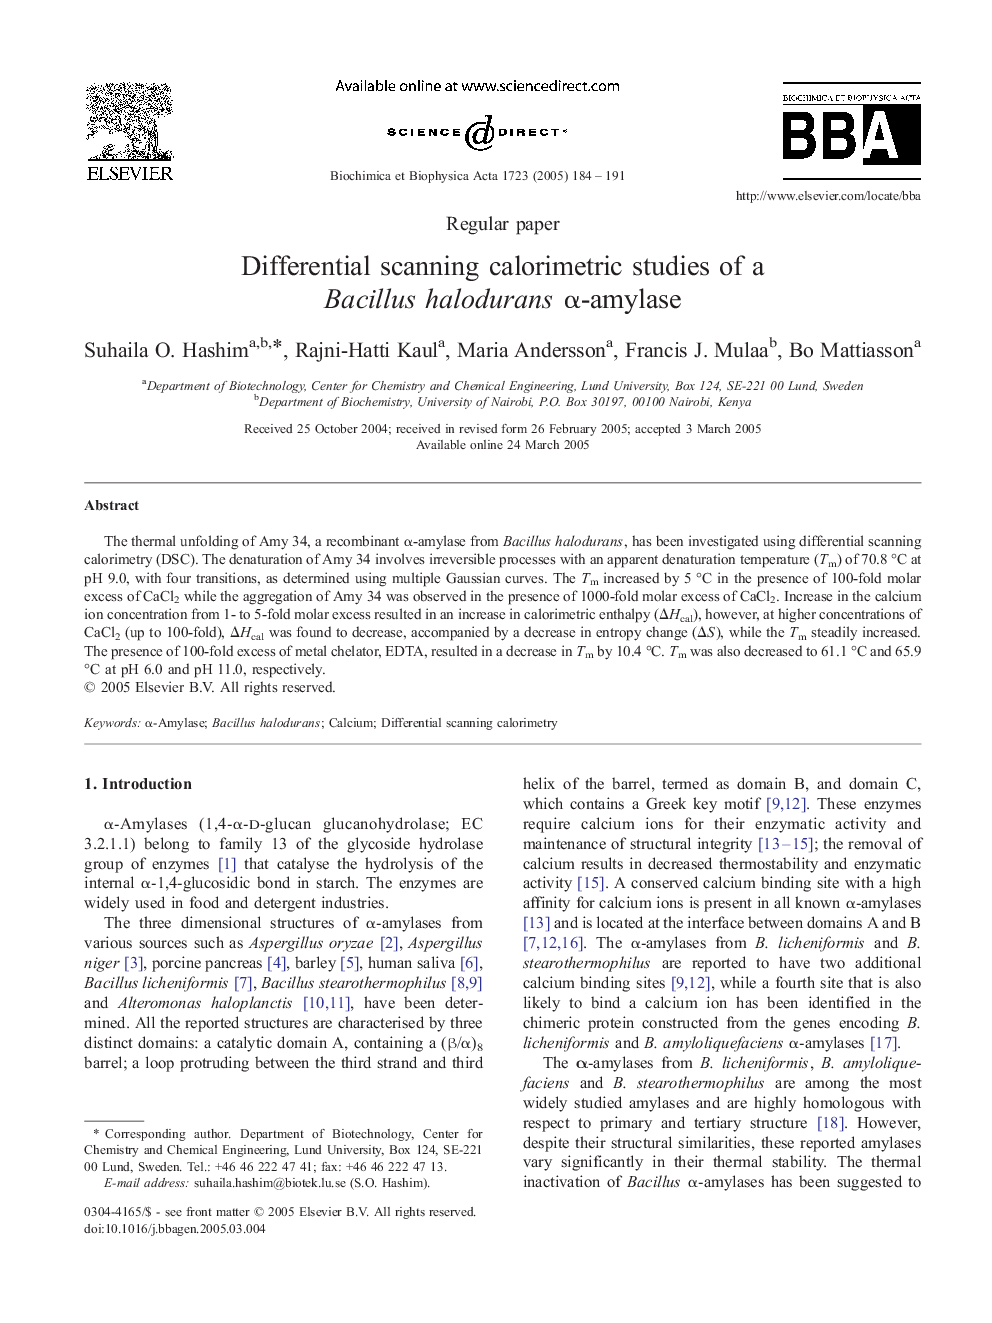 Differential scanning calorimetric studies of a Bacillus halodurans Î±-amylase